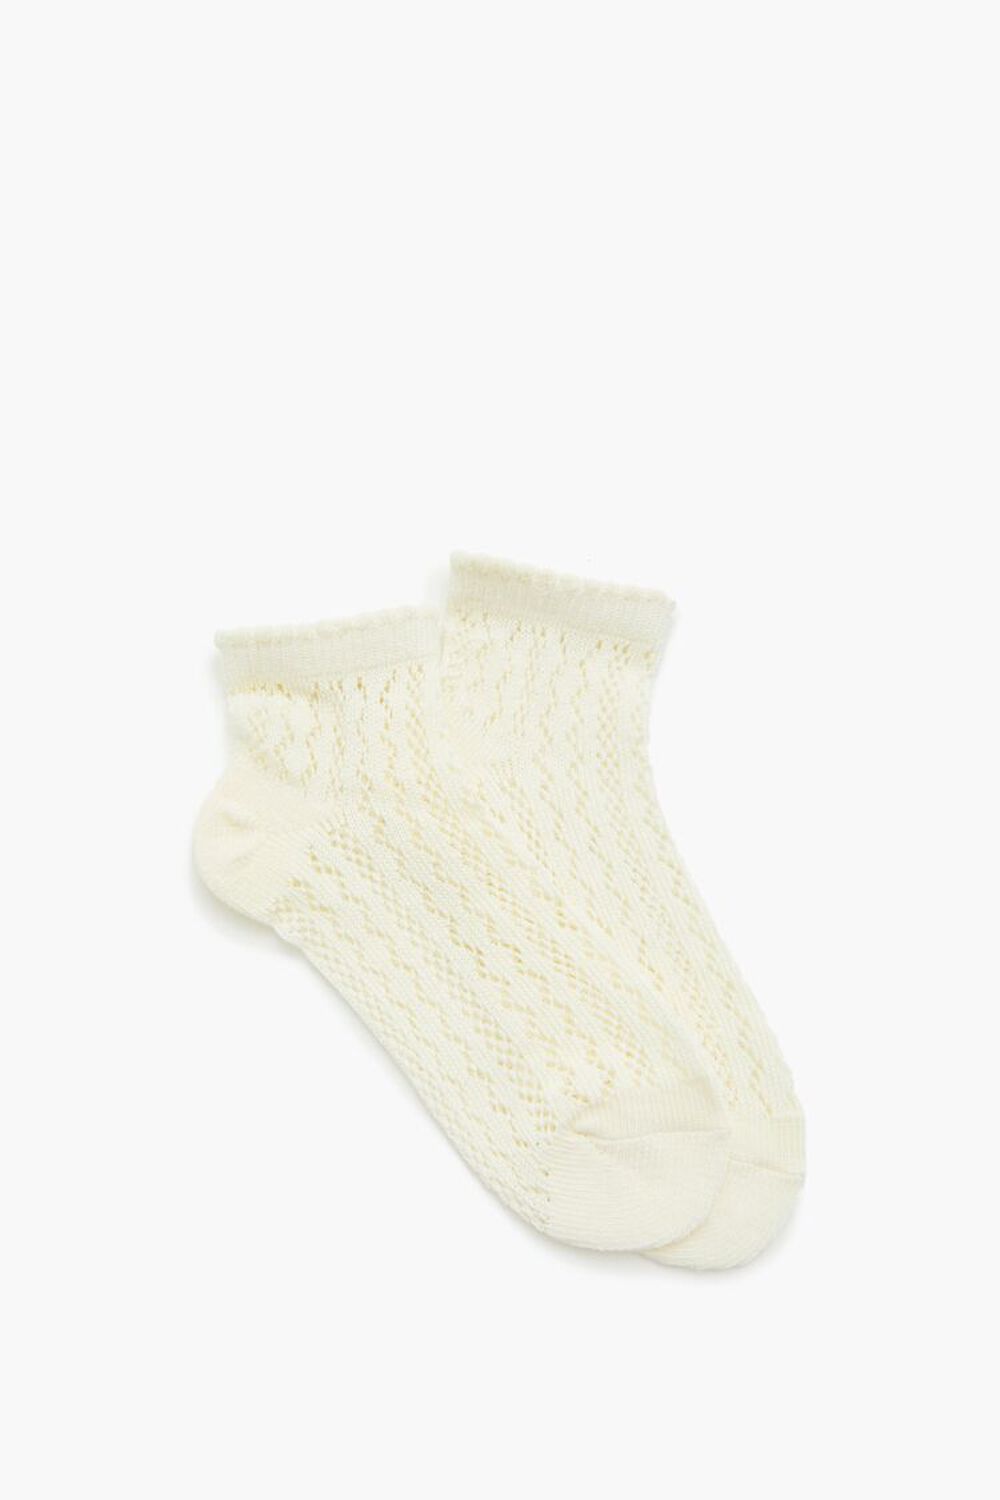 CREAM Scalloped Open-Knit Ankle Socks, image 2